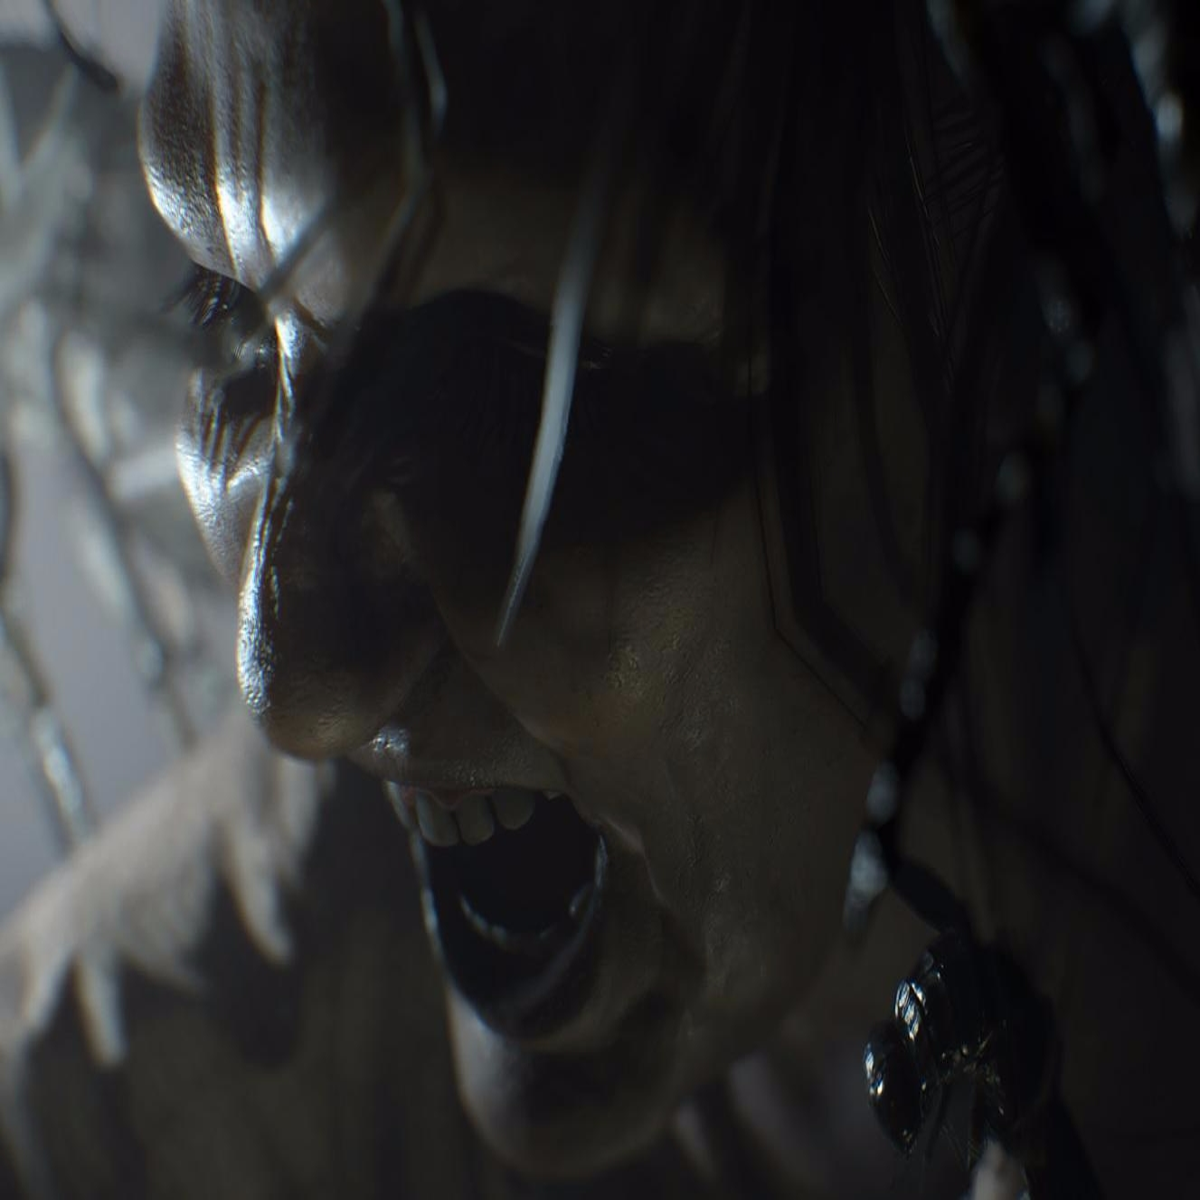 Resident Evil 7: Biohazard' VR Review - Bringing The Survival Back to  Horror Games